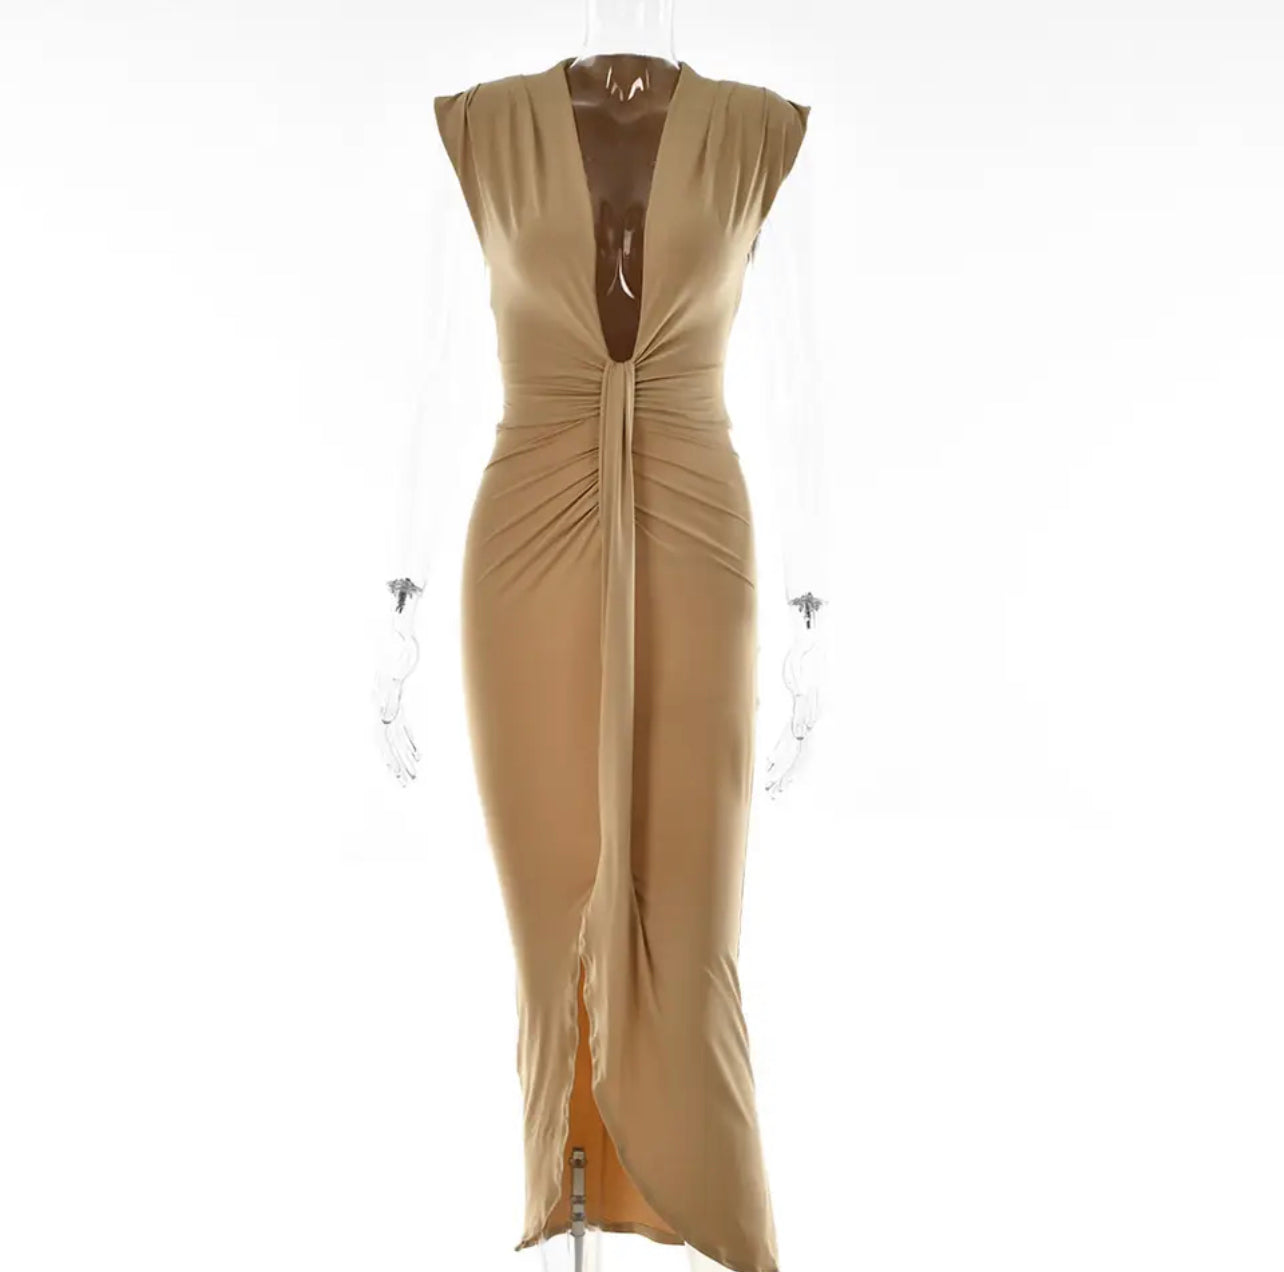 Mia Slay Sleeveless Dress (Brown)